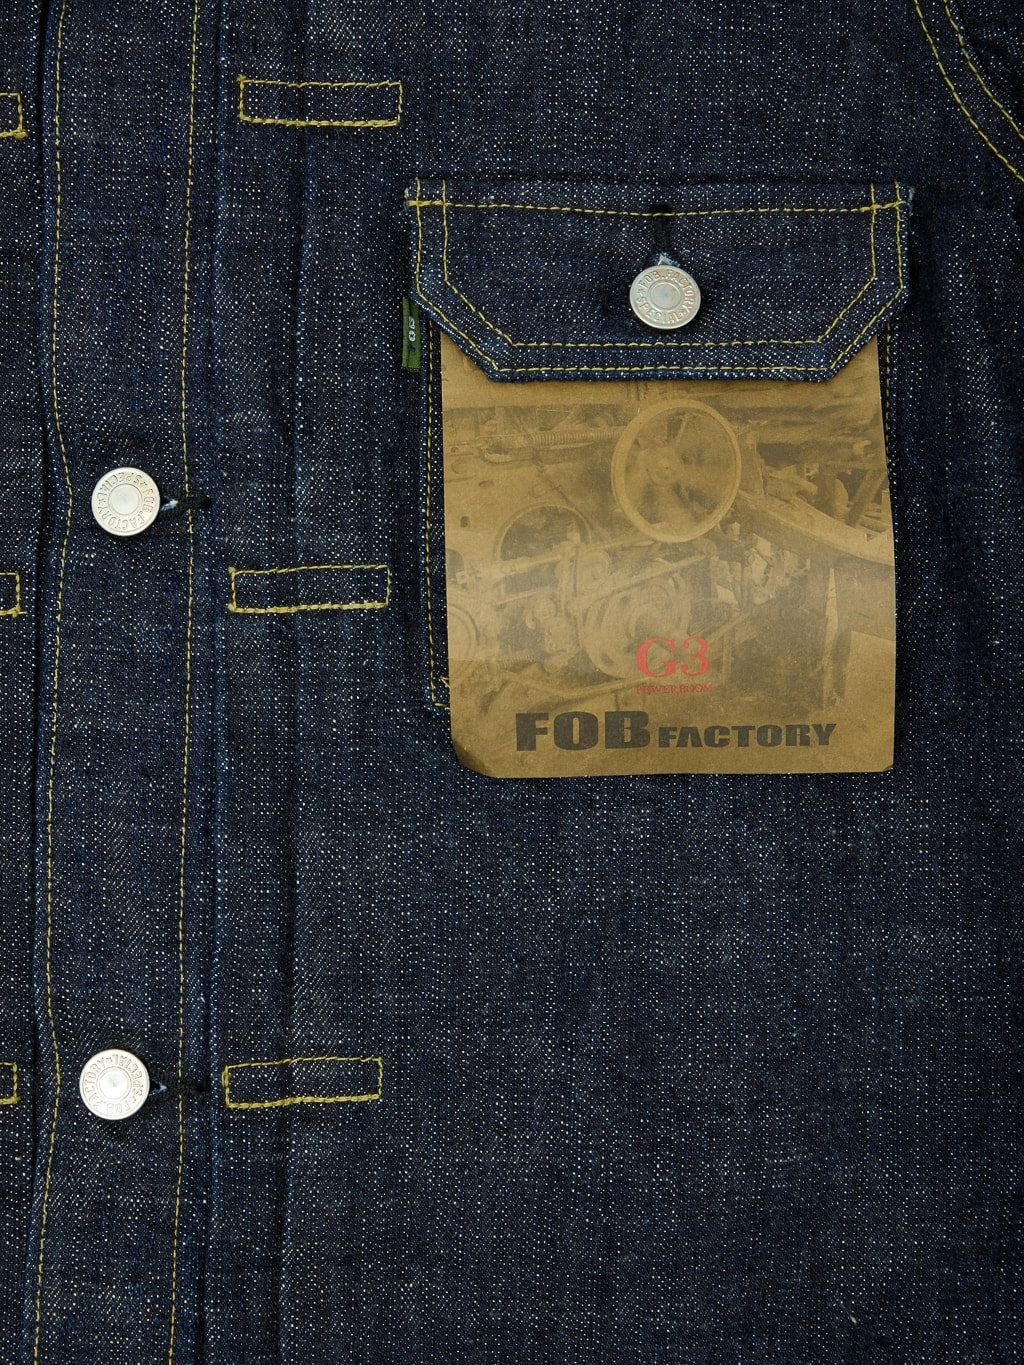 Fob factory Type III denim jacket selvedge original pocket flasher